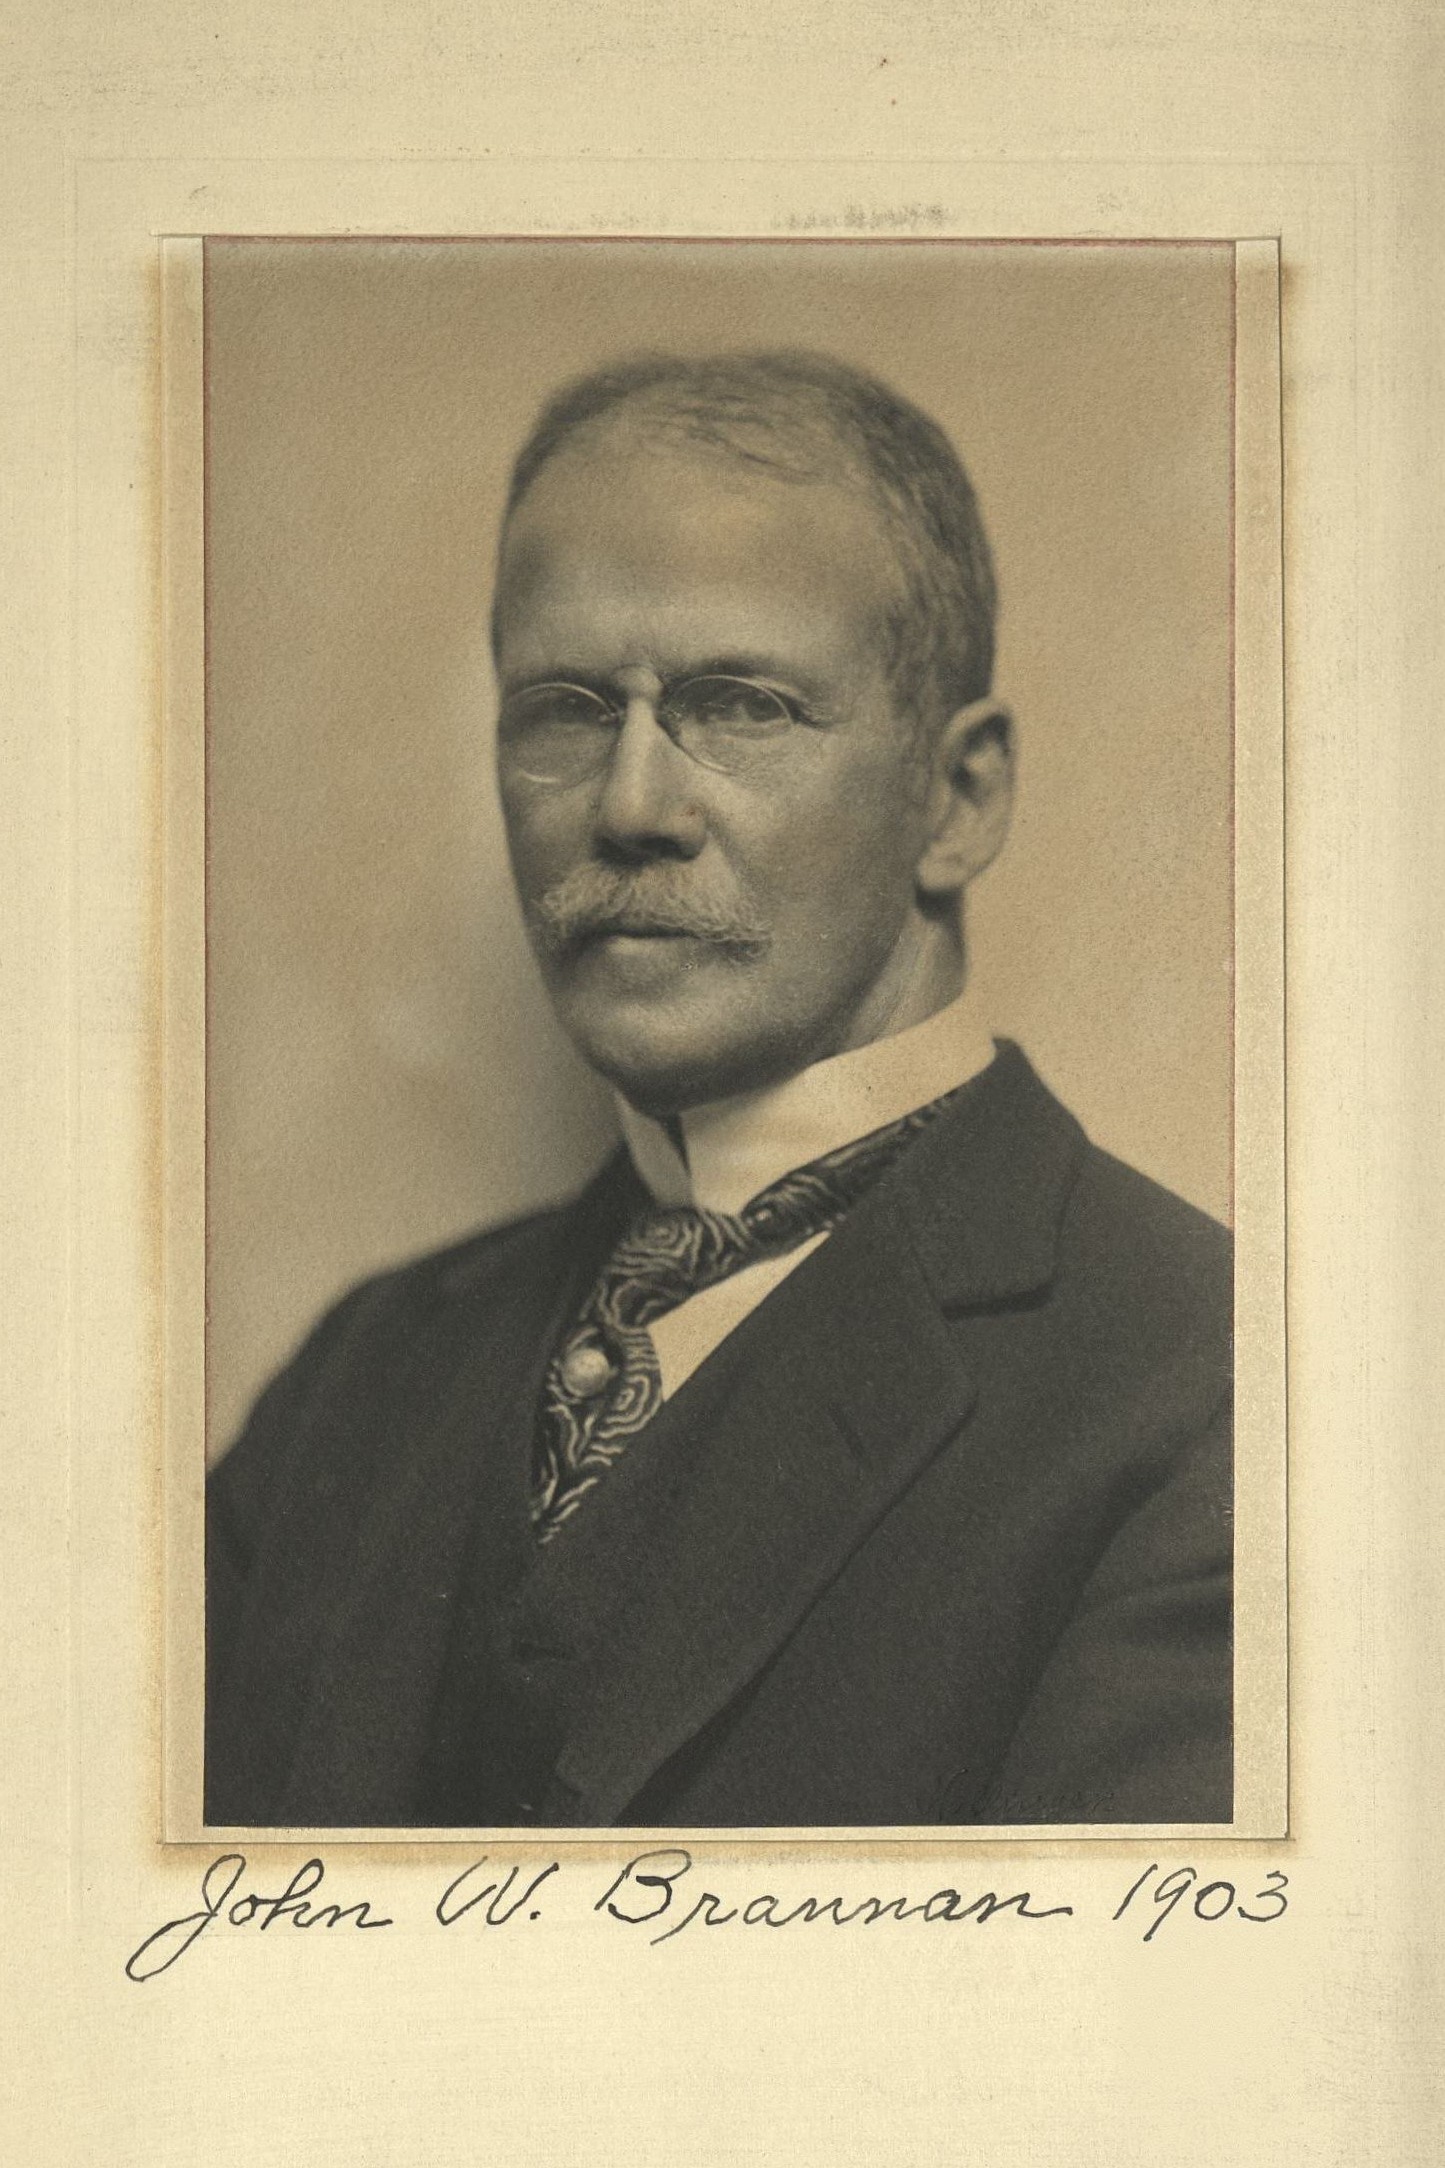 Member portrait of John W. Brannan